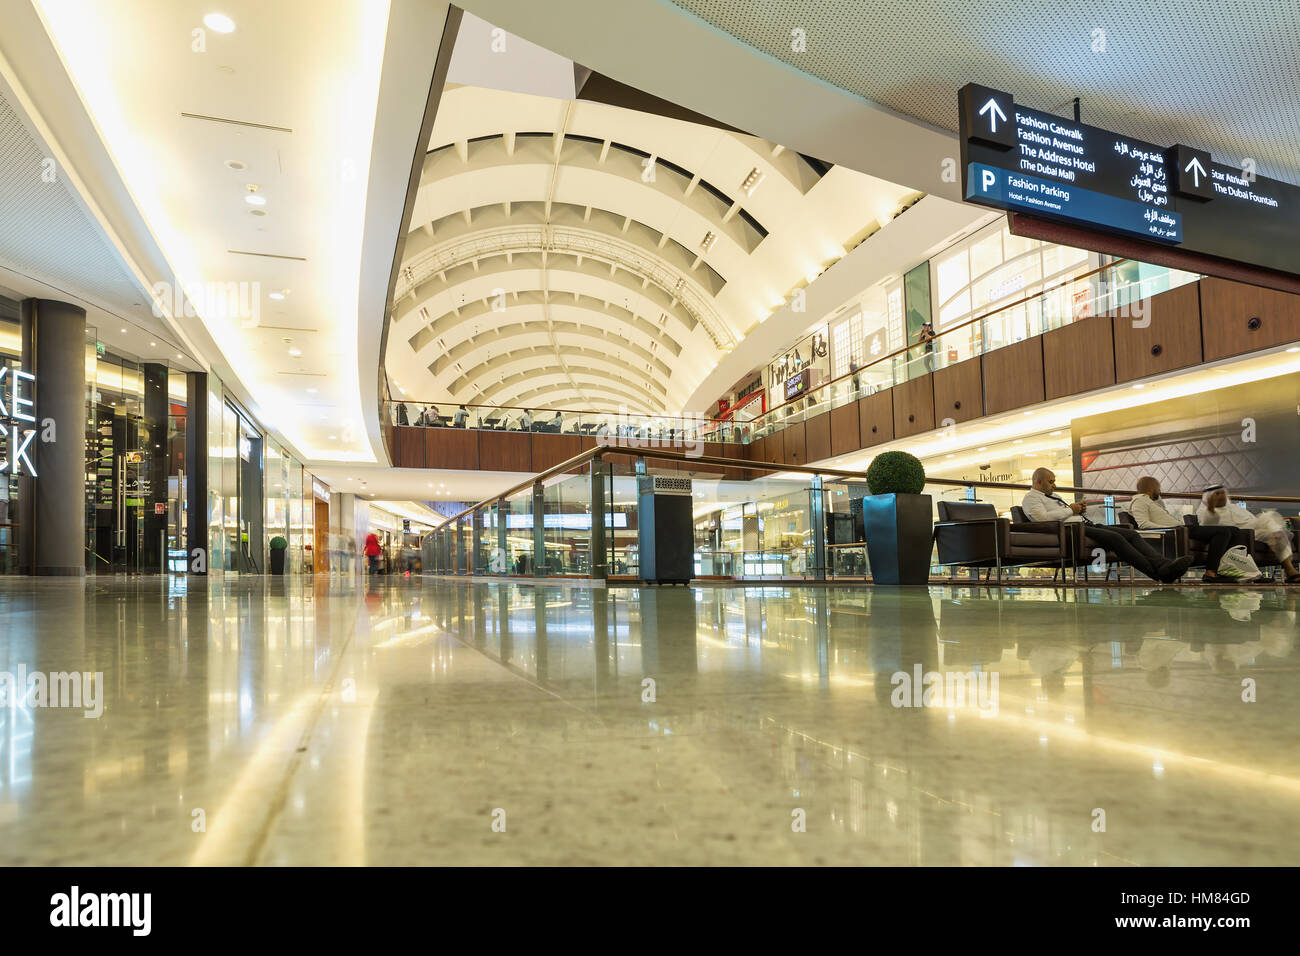 DUBAI - NOVEMBER 08, 2016: The Dubai Mall linterior. The Dubai Mall located in Dubai, it is part of the 20-billion-dollar Downtown Dubai complex, and  Stock Photo